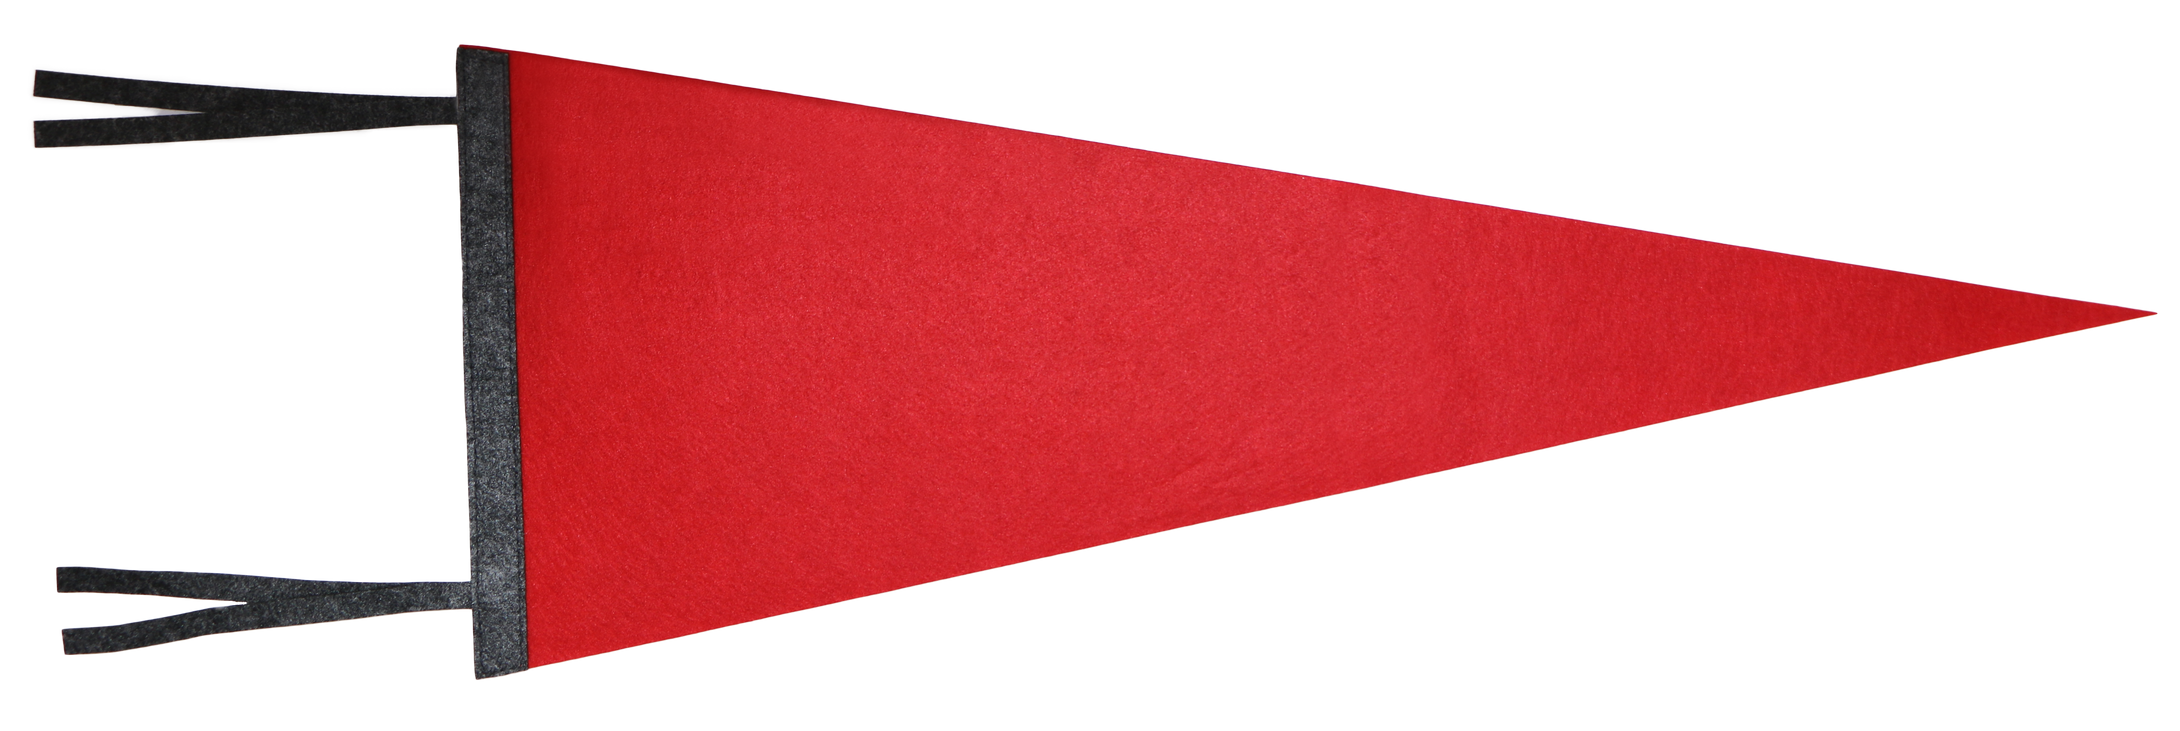 Red / Heather Black Blank Pennant Flag